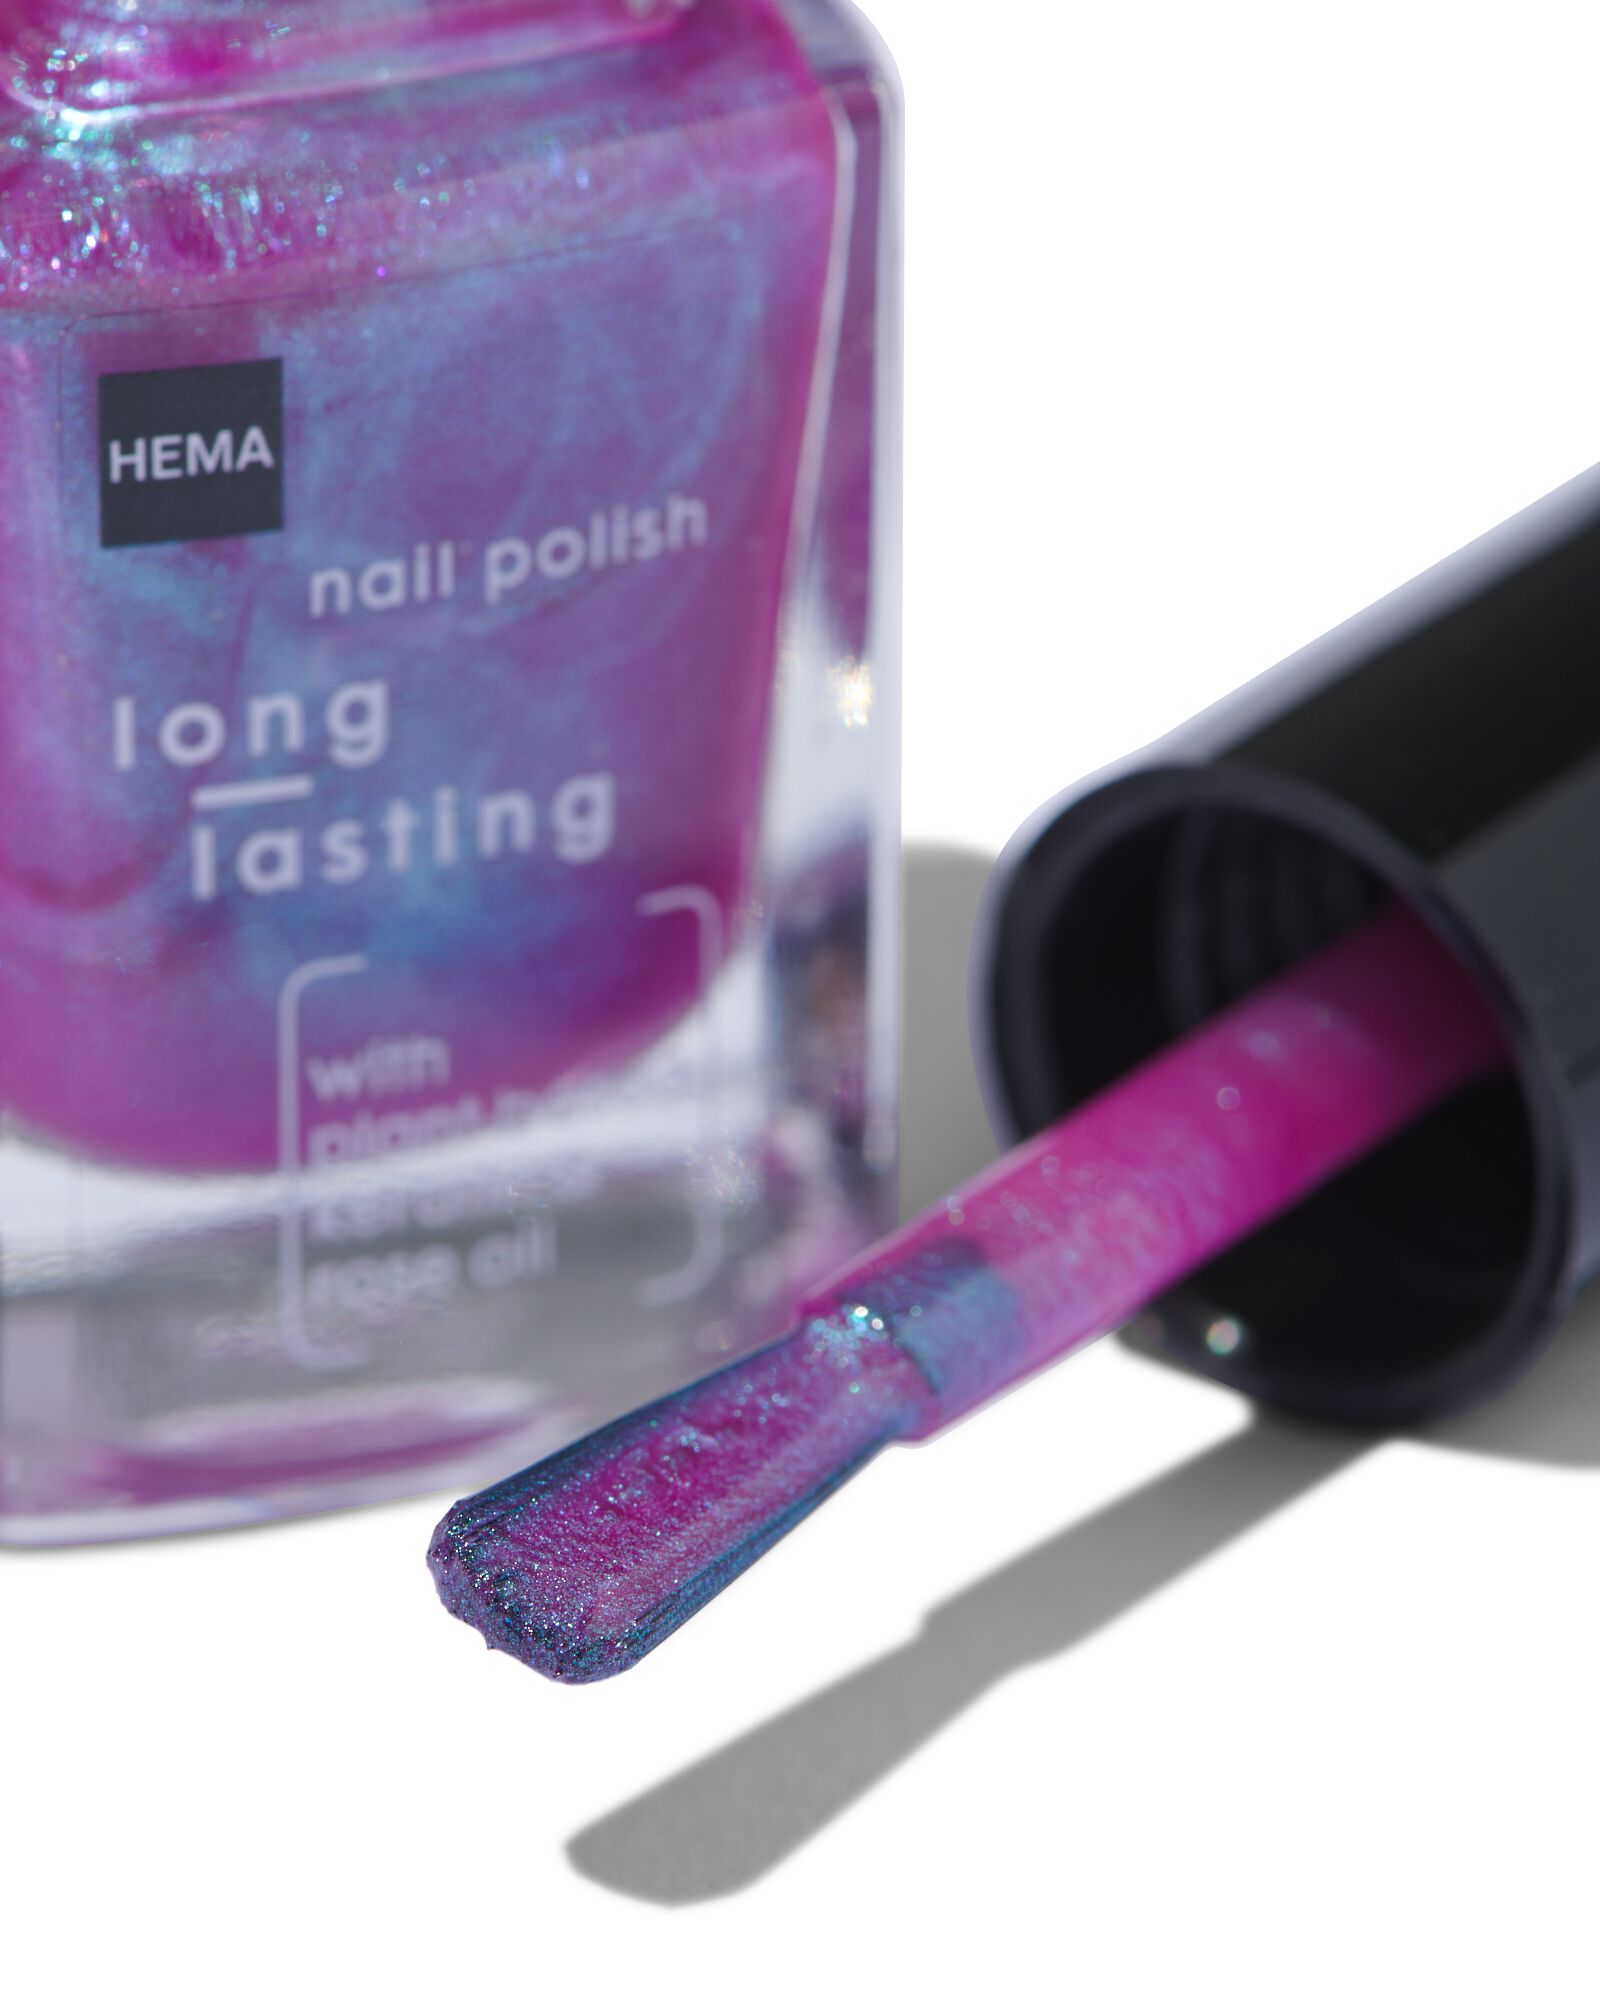 long lasting nagellak 951 pleasing purple - HEMA